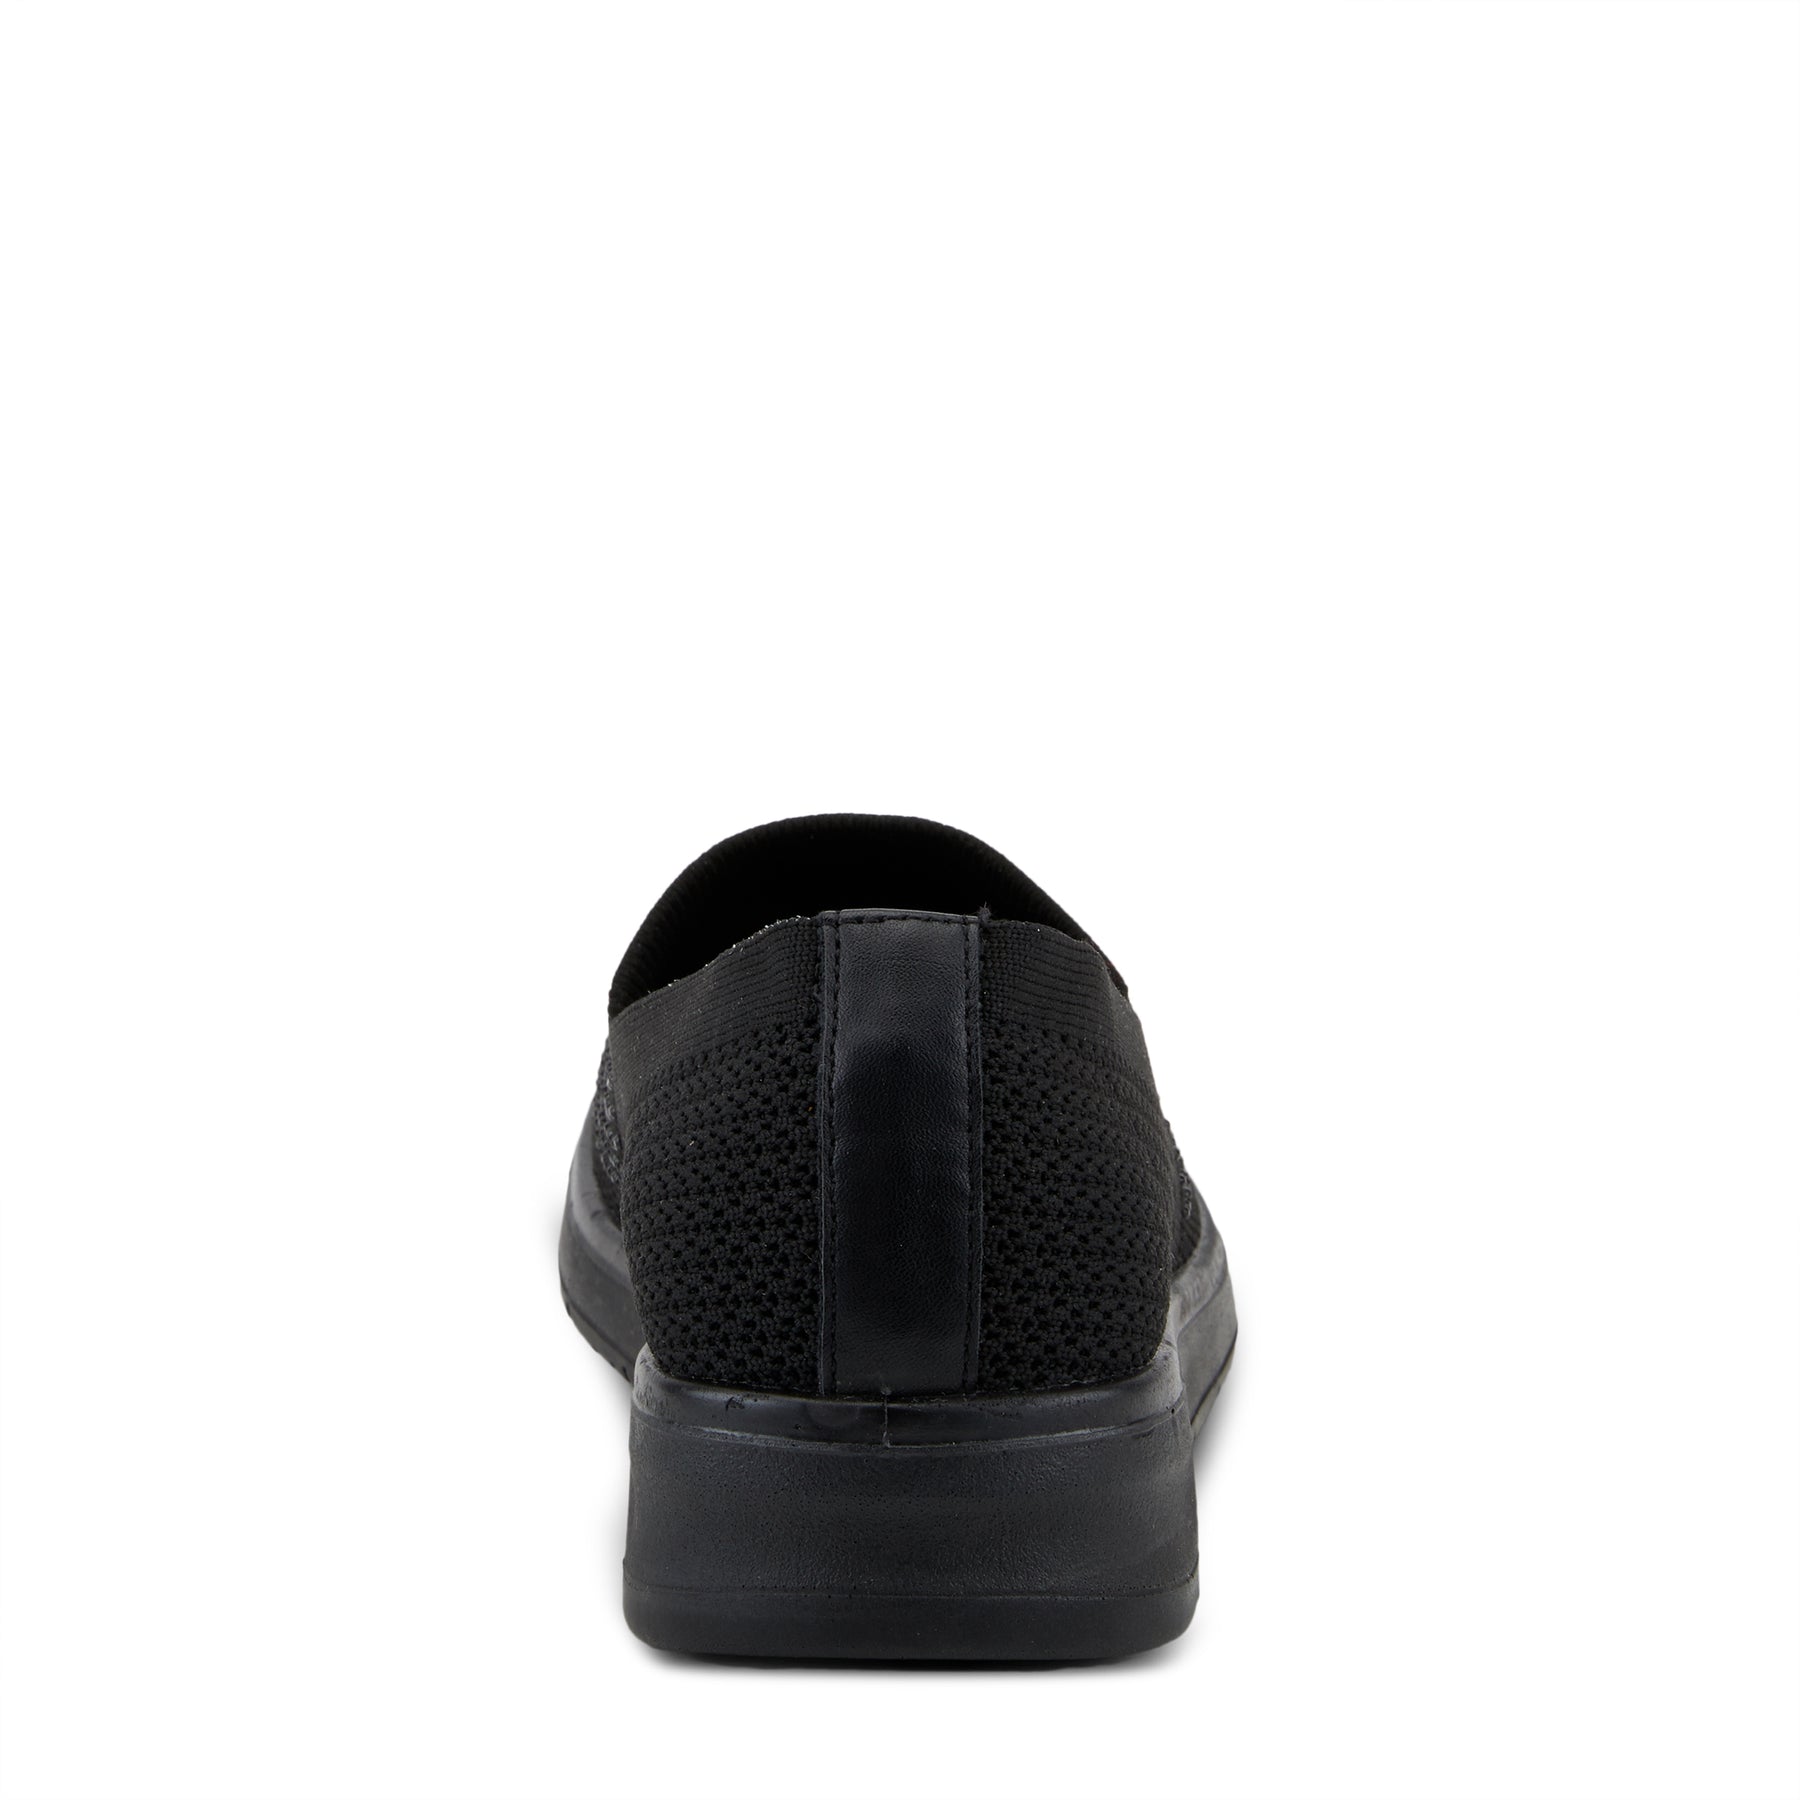 Comfortable Flexus Century Slip-on Shoe—Spring Step Shoes